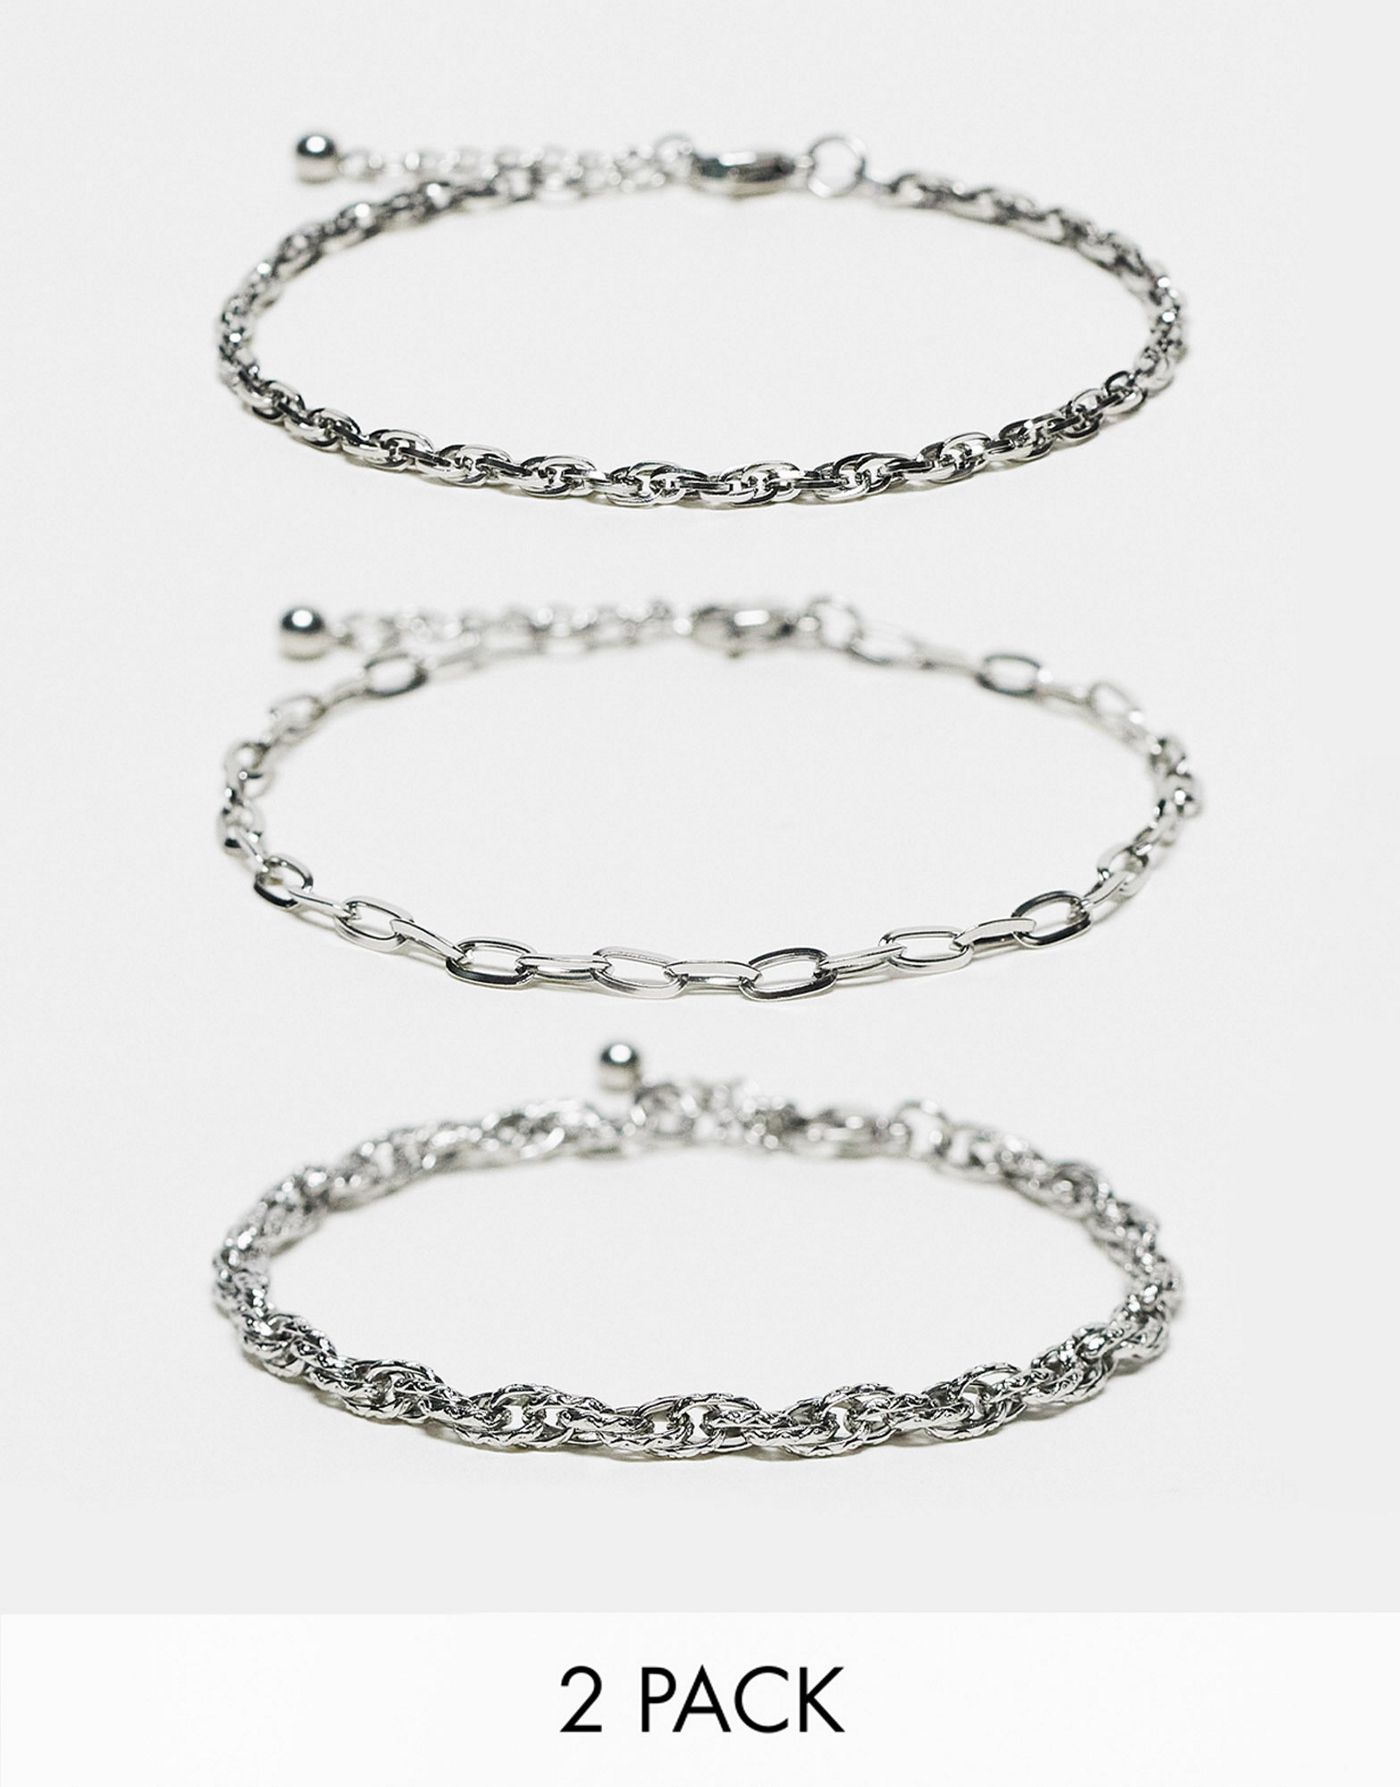 ASOS DESIGN 3 pack waterproof stainless steel chain bracelet set in silver tone